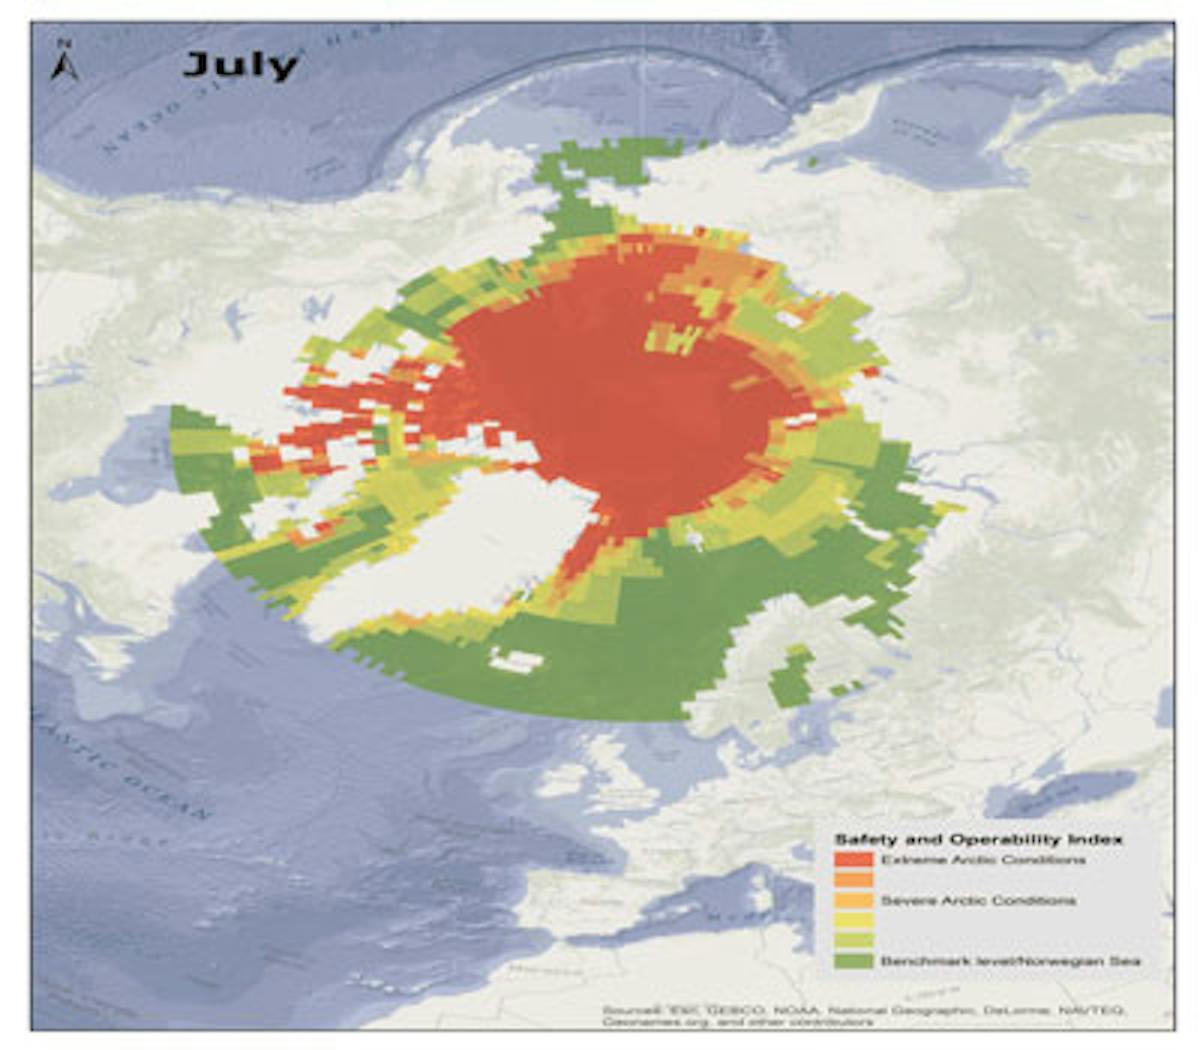 DNL GL Arctic Risk Map